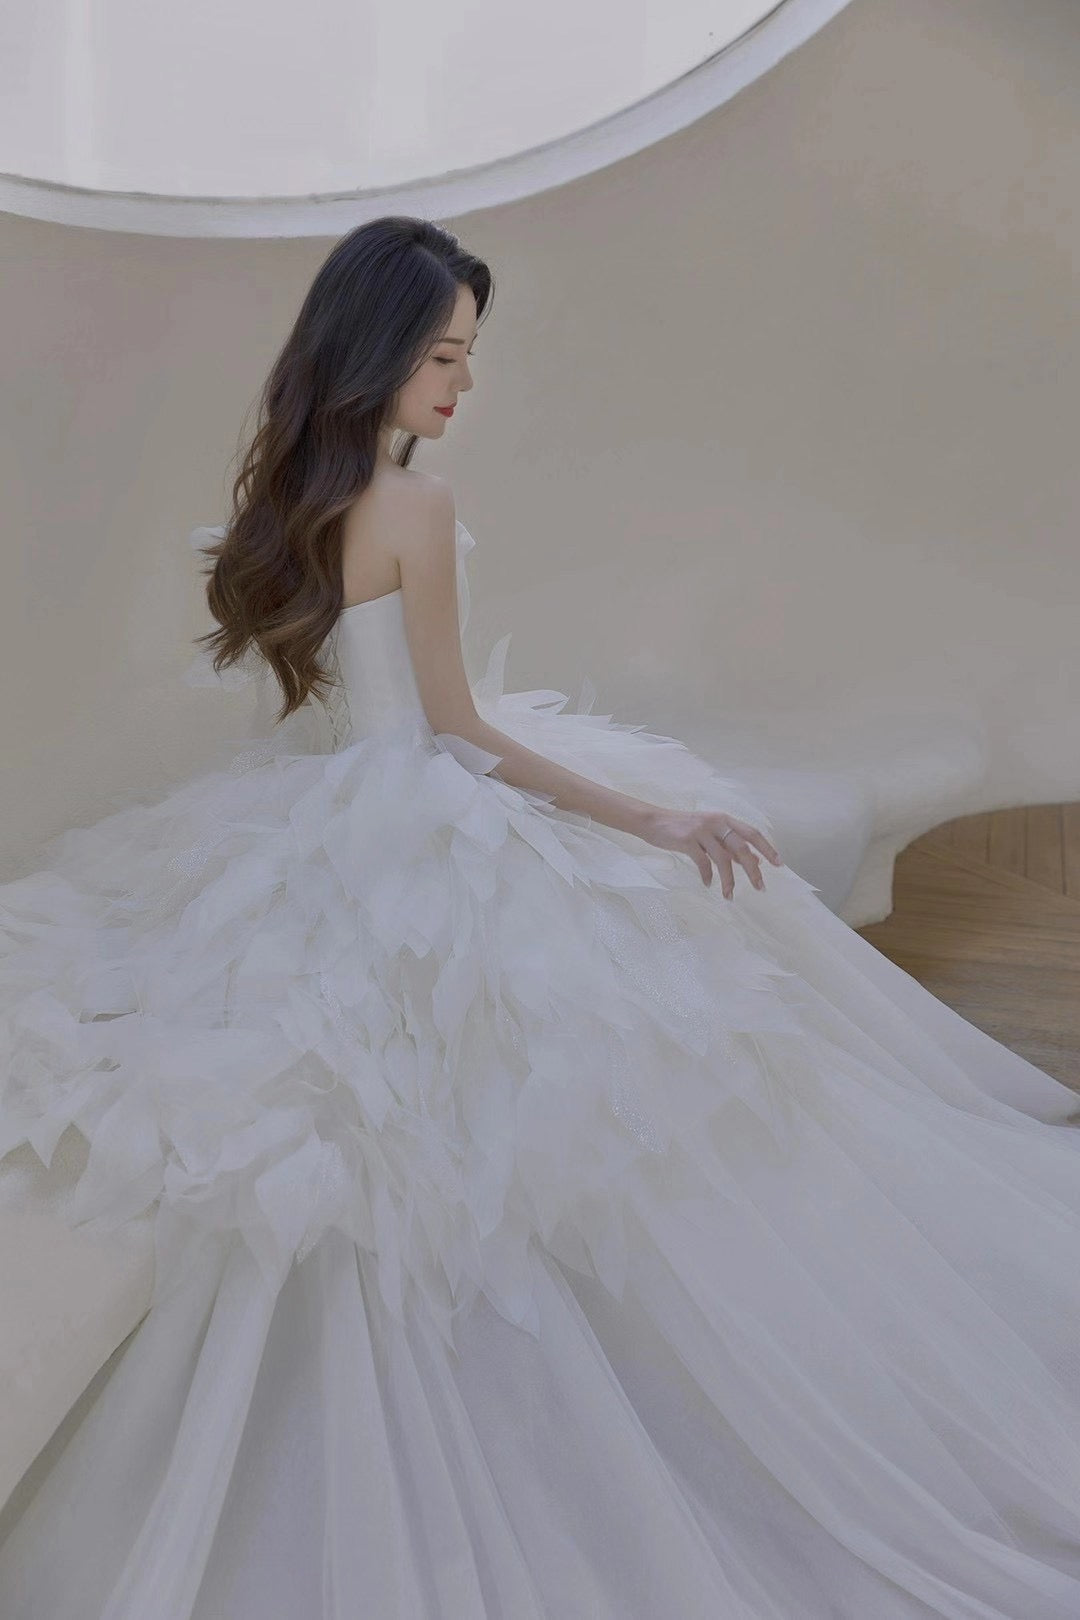 Elegant Newest Popular 2021 Bridal Gowns, High Quality A-line Wedding Dresses